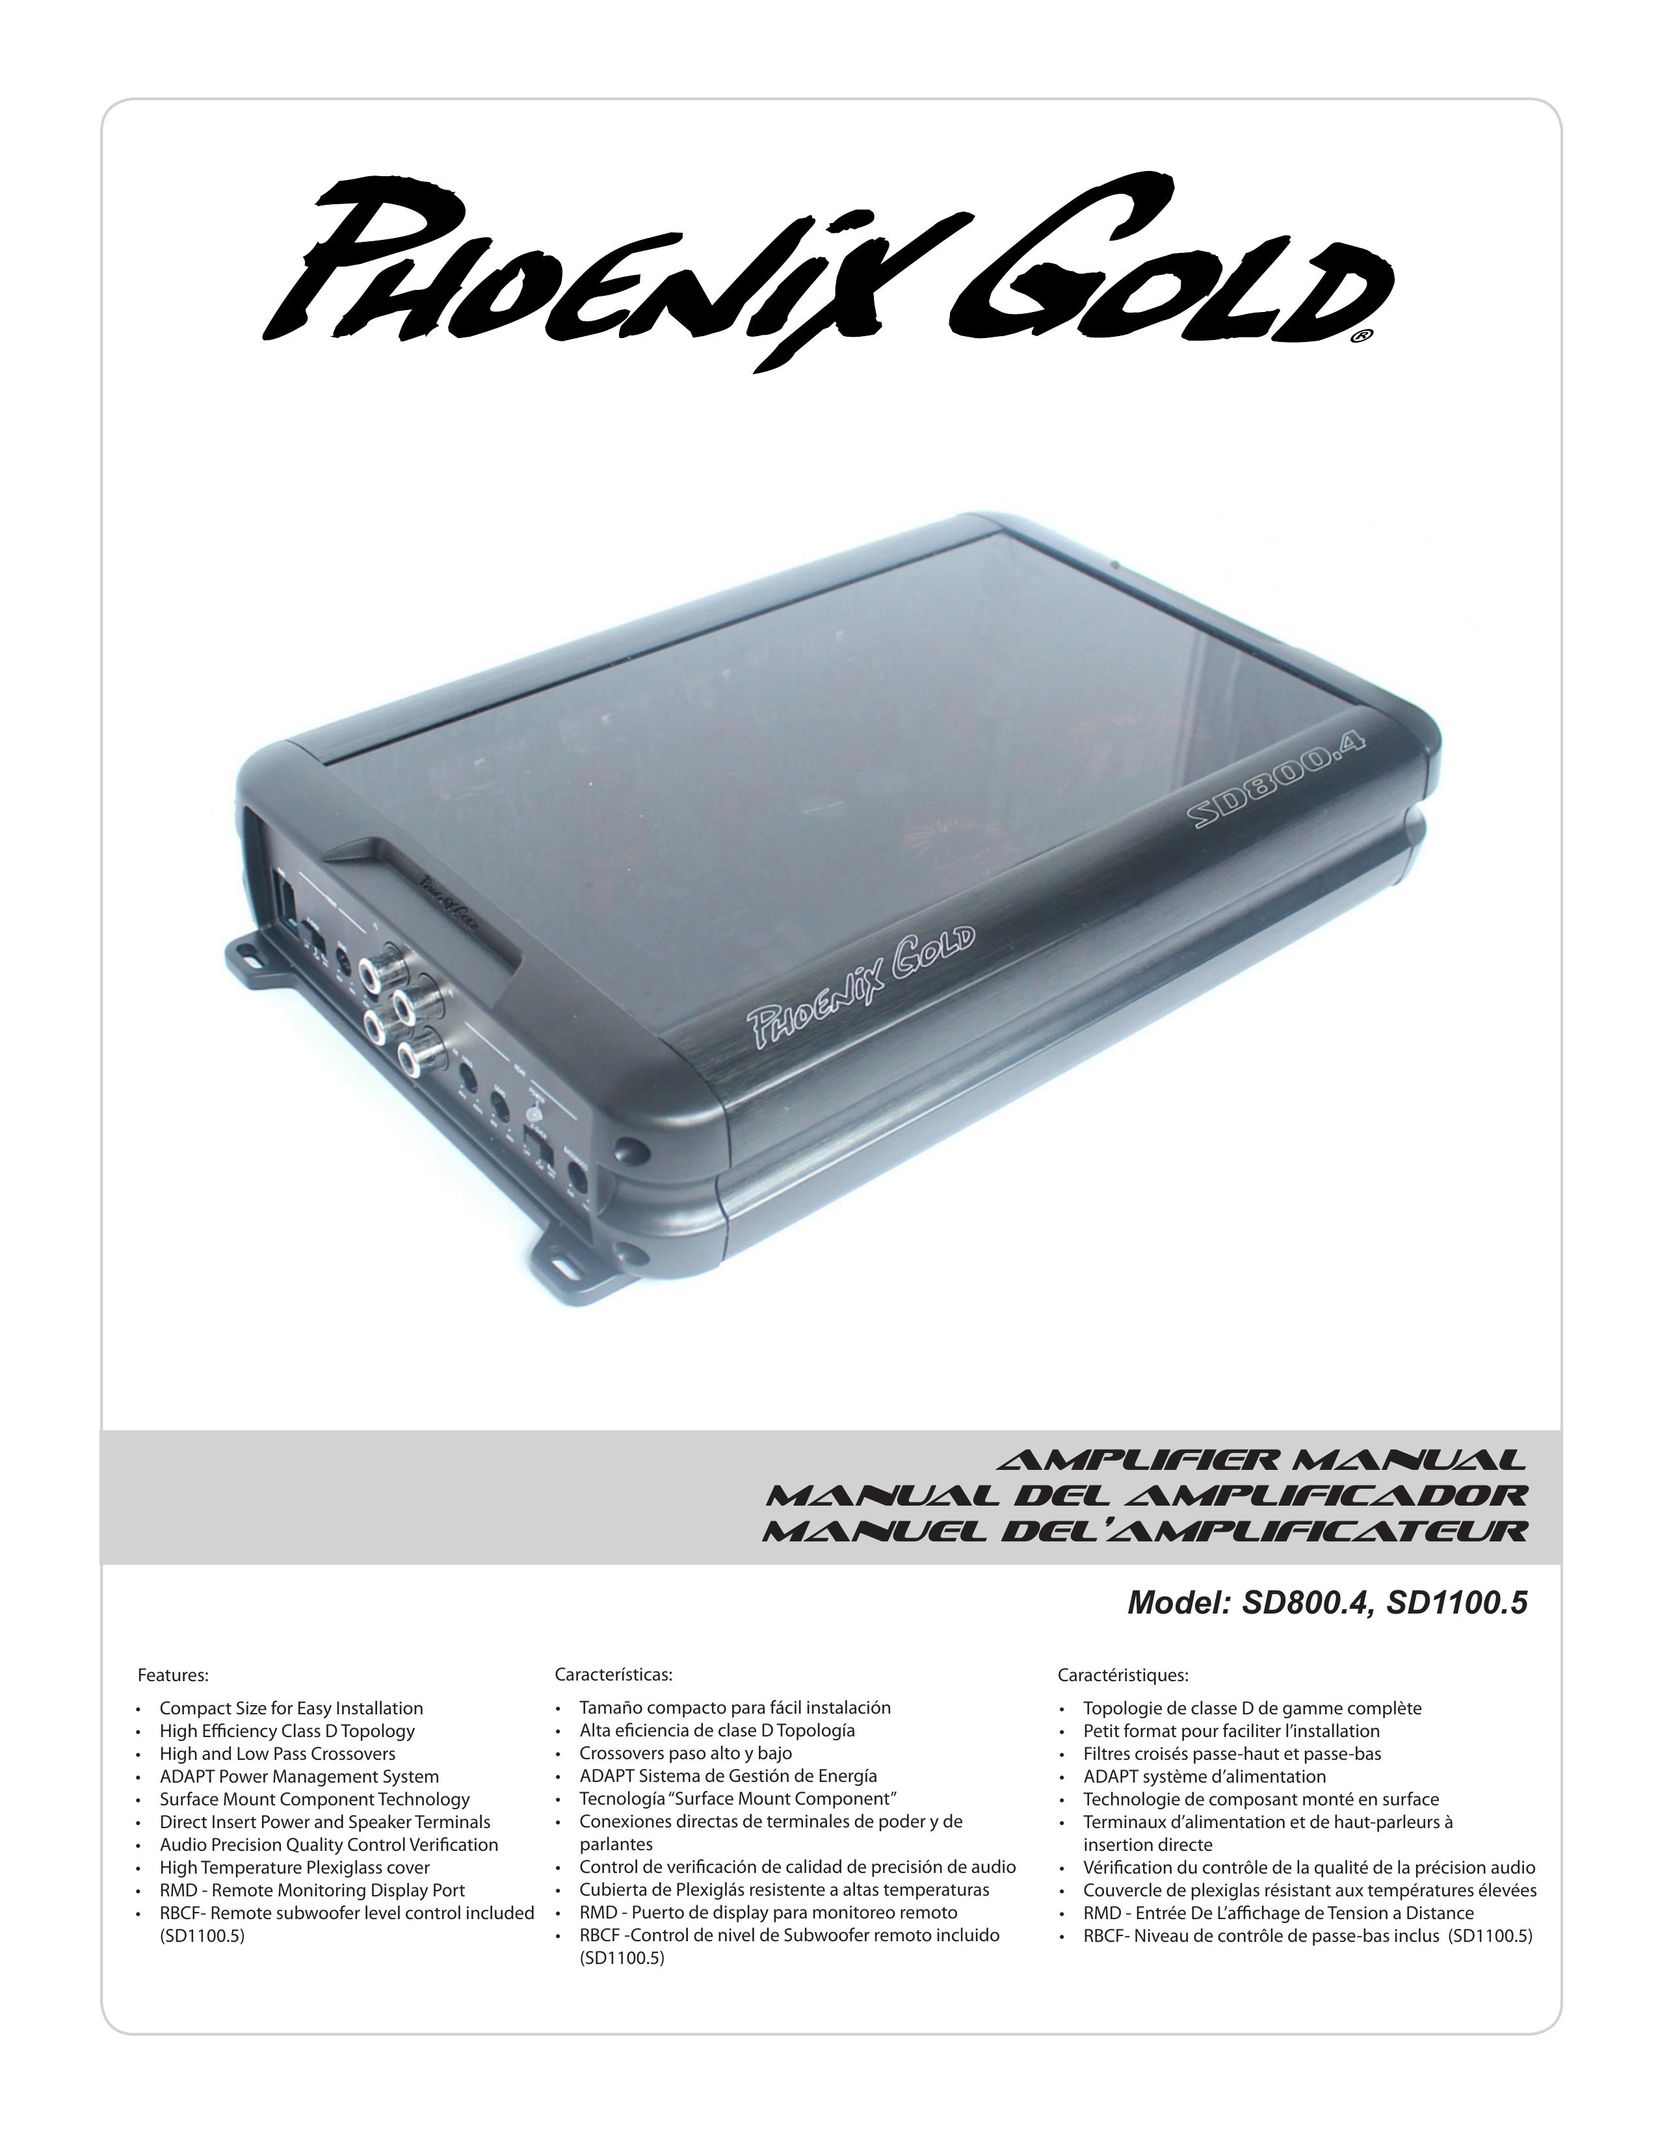 Phoenix Gold SD1100.5 Car Amplifier User Manual